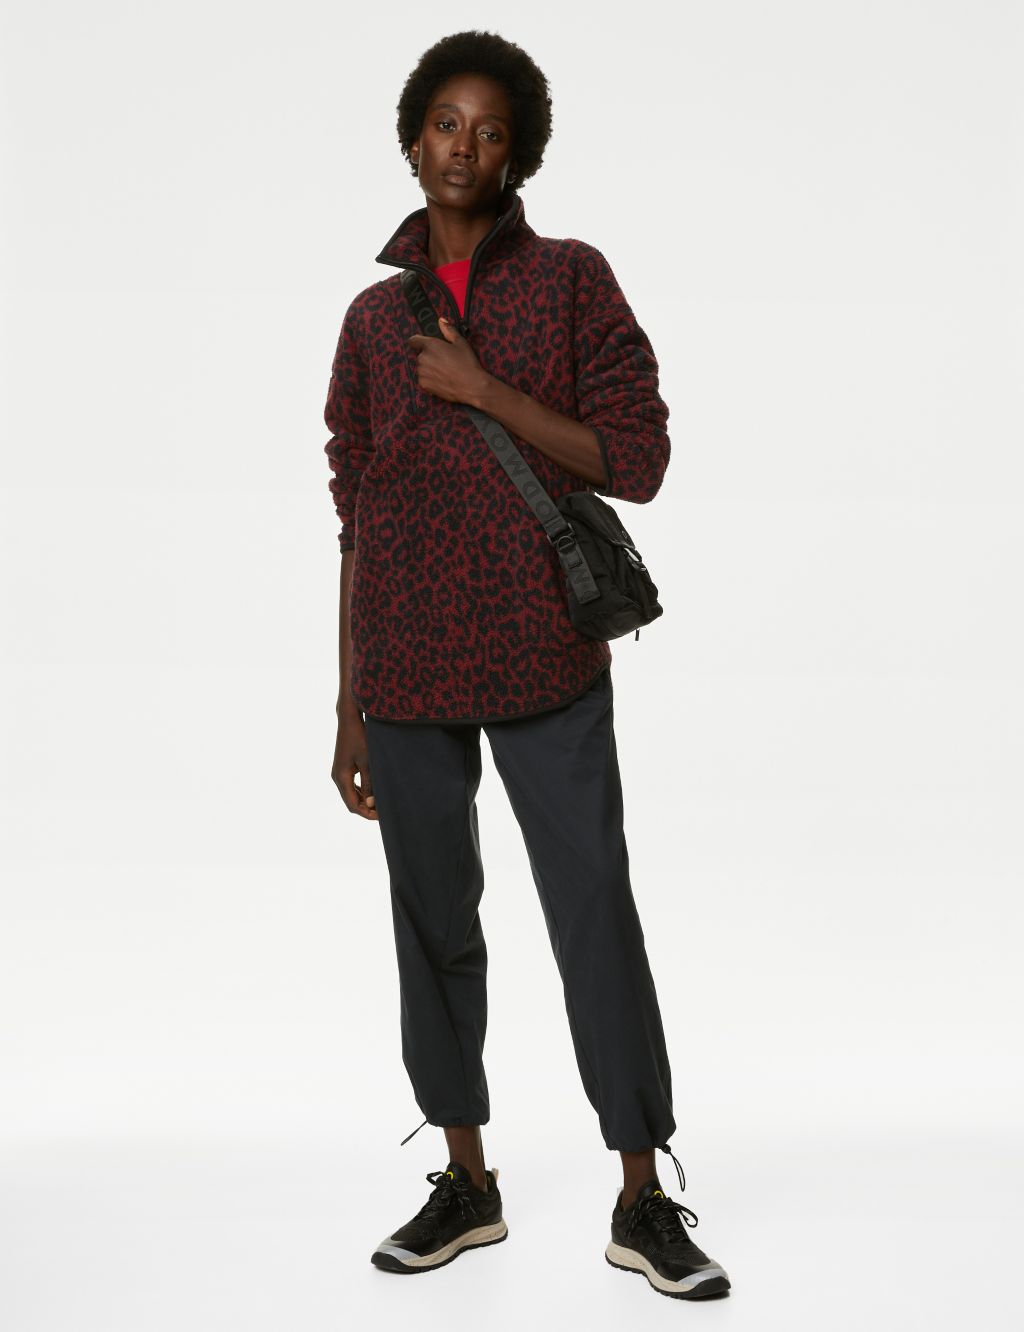 Louis Vuitton Dark Brown Monogram Mix Black Impressive Polo Shirt